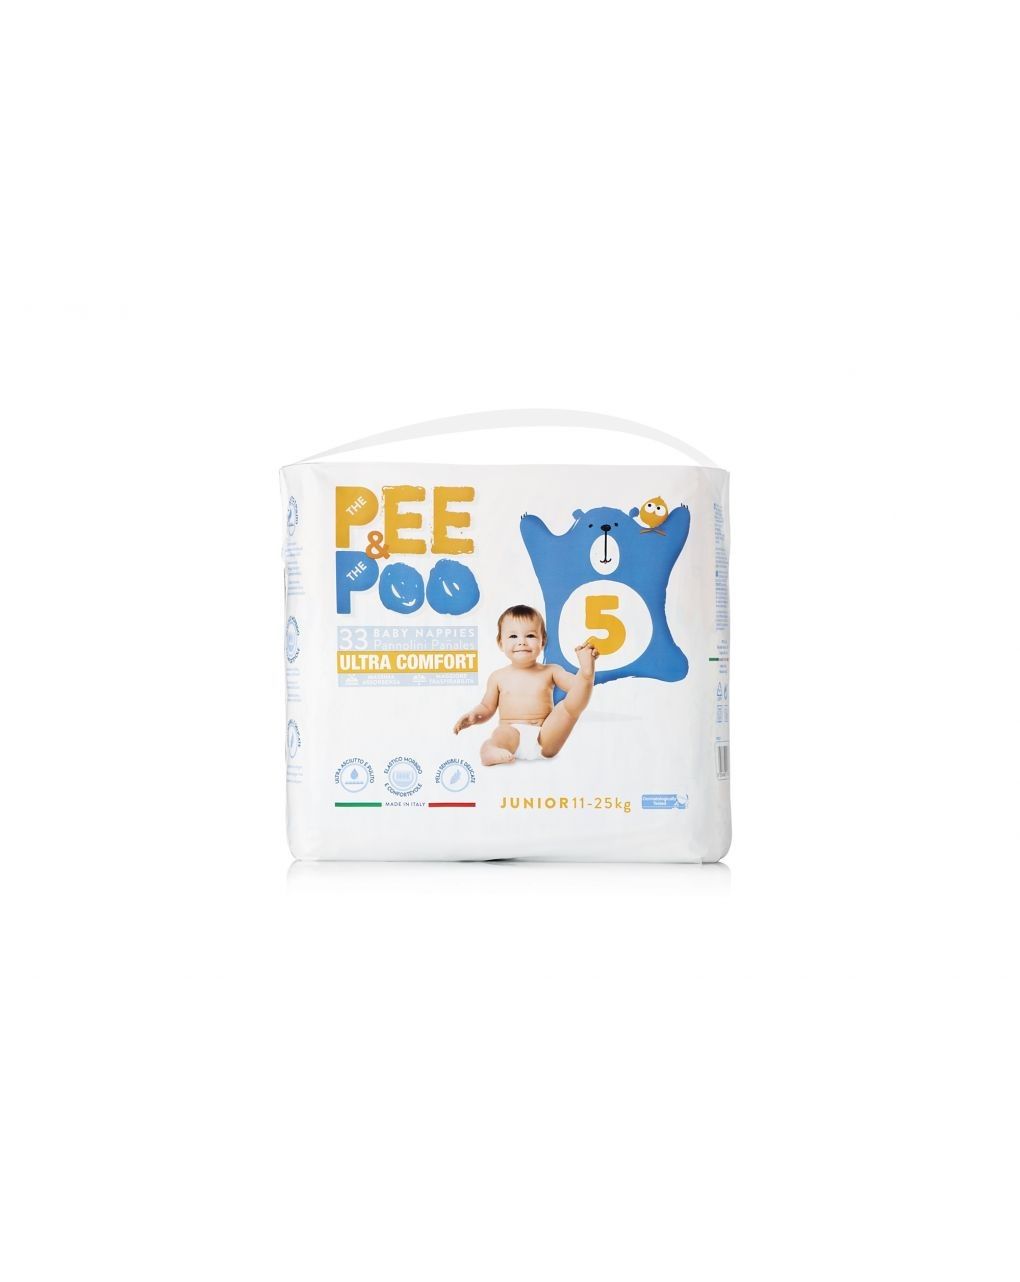 Pee&poo - junior tg5 33 pz - The Pee & The Poo